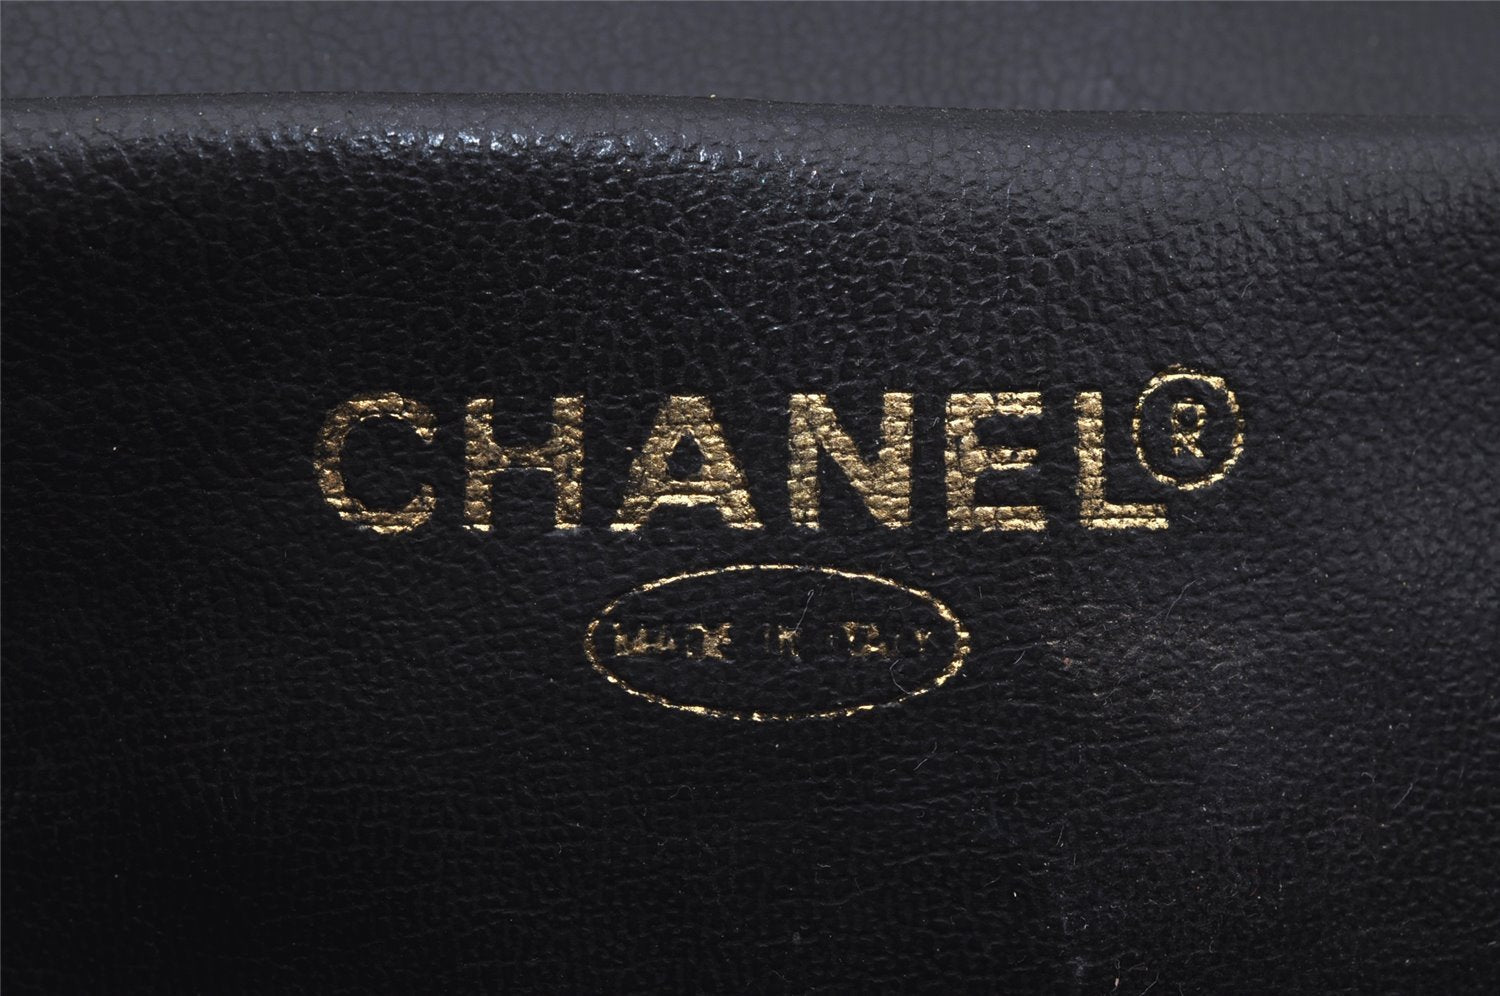 Authentic CHANEL Caviar Skin Vanity Cosmetic Bag Purse Black CC 3760J